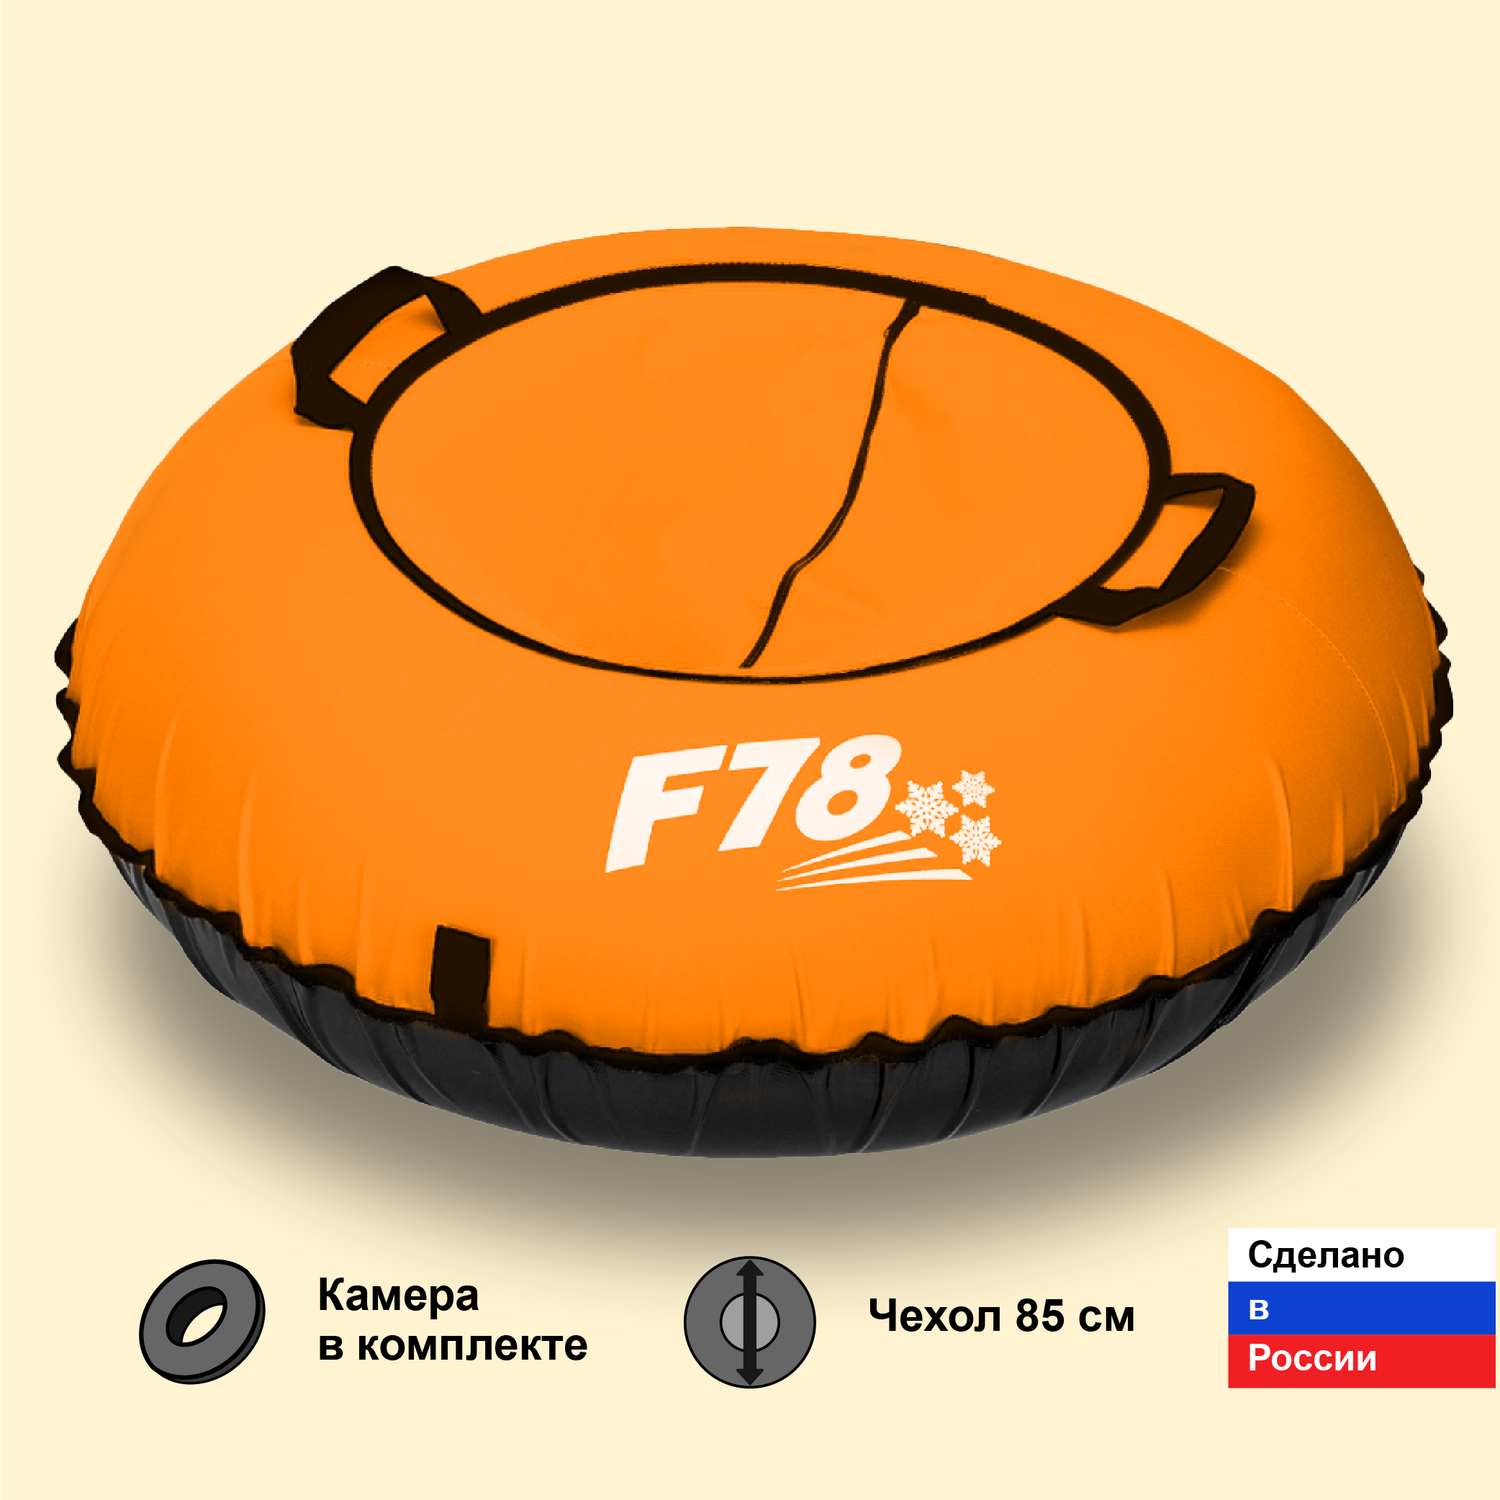 Тюбинг ватрушка F78 Оксфорд 85 см Оранжевый - фото 1